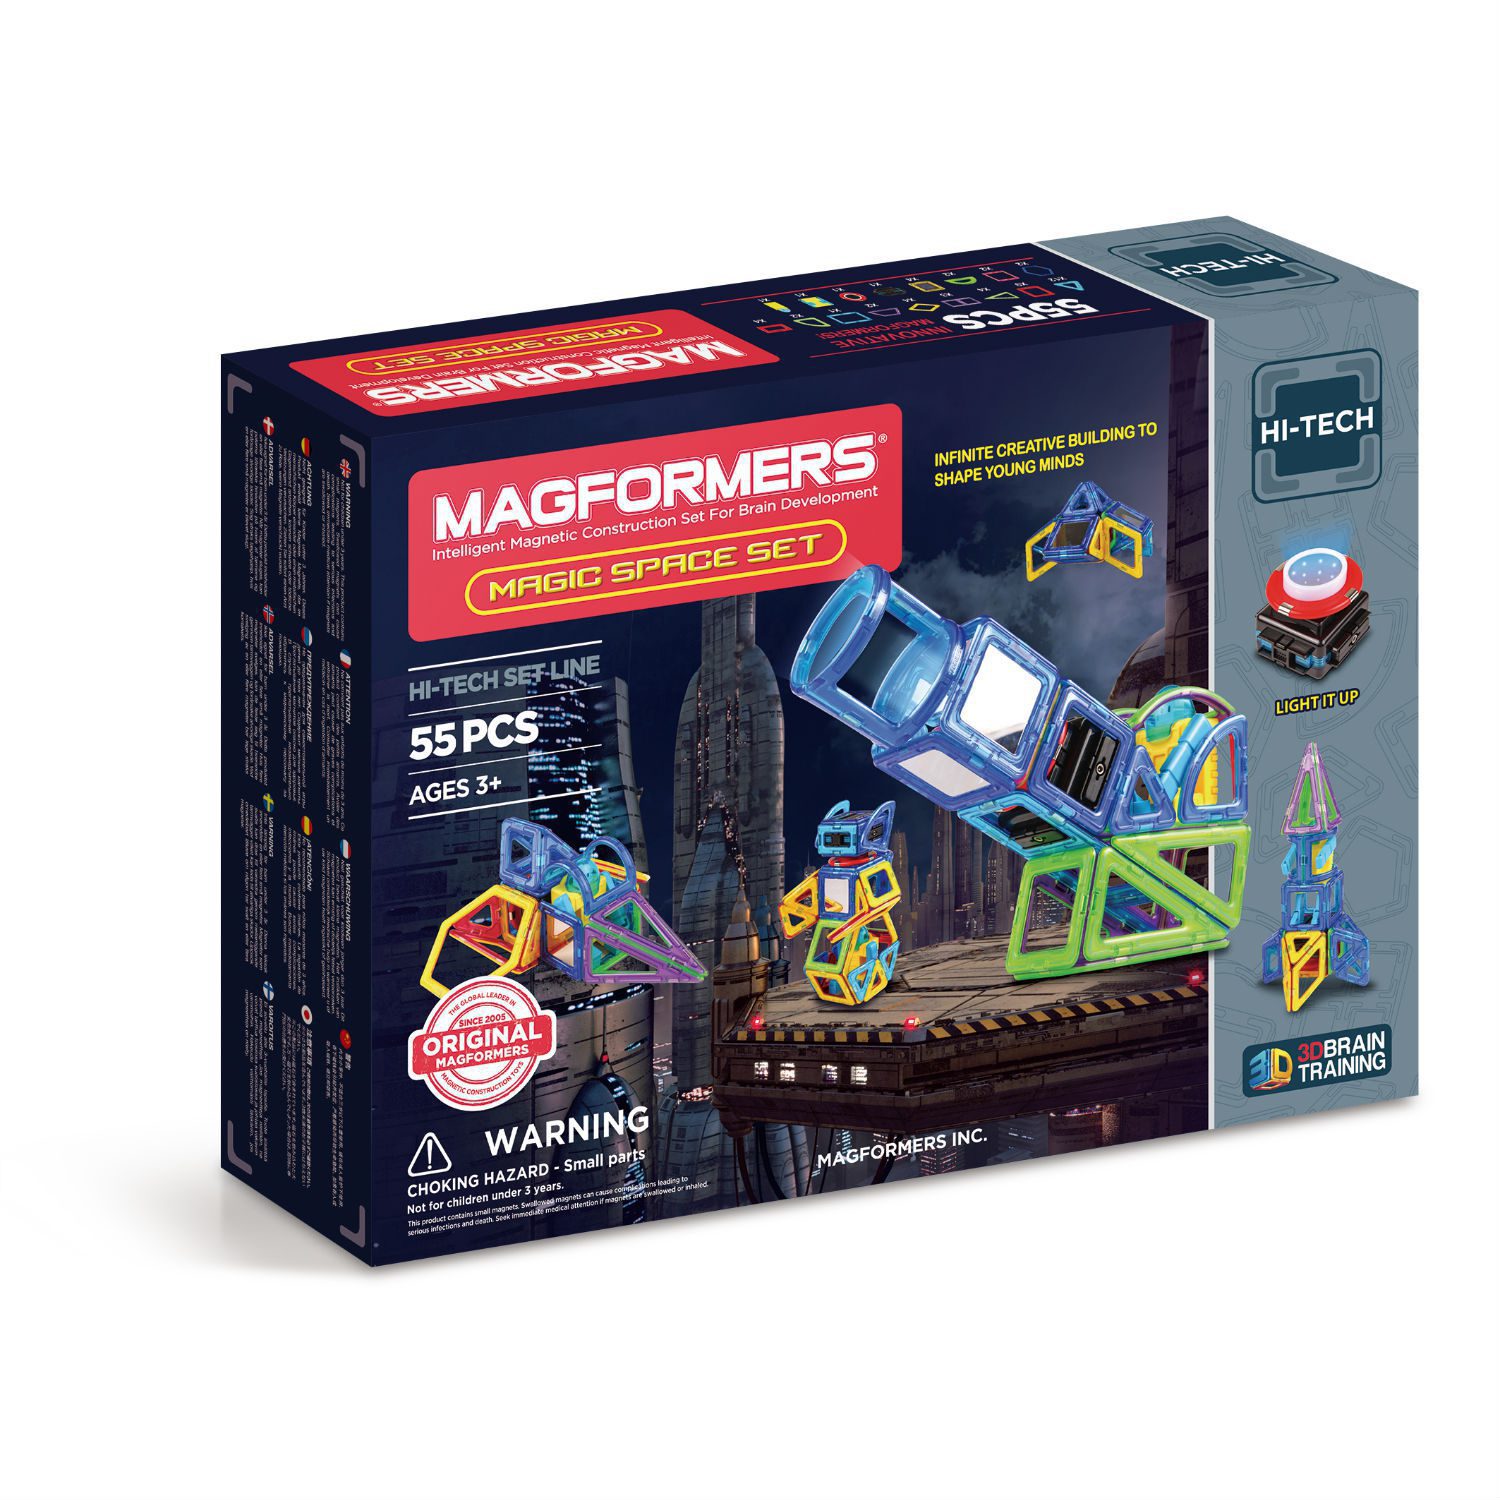 Magformers Hi-Tech Magic Space